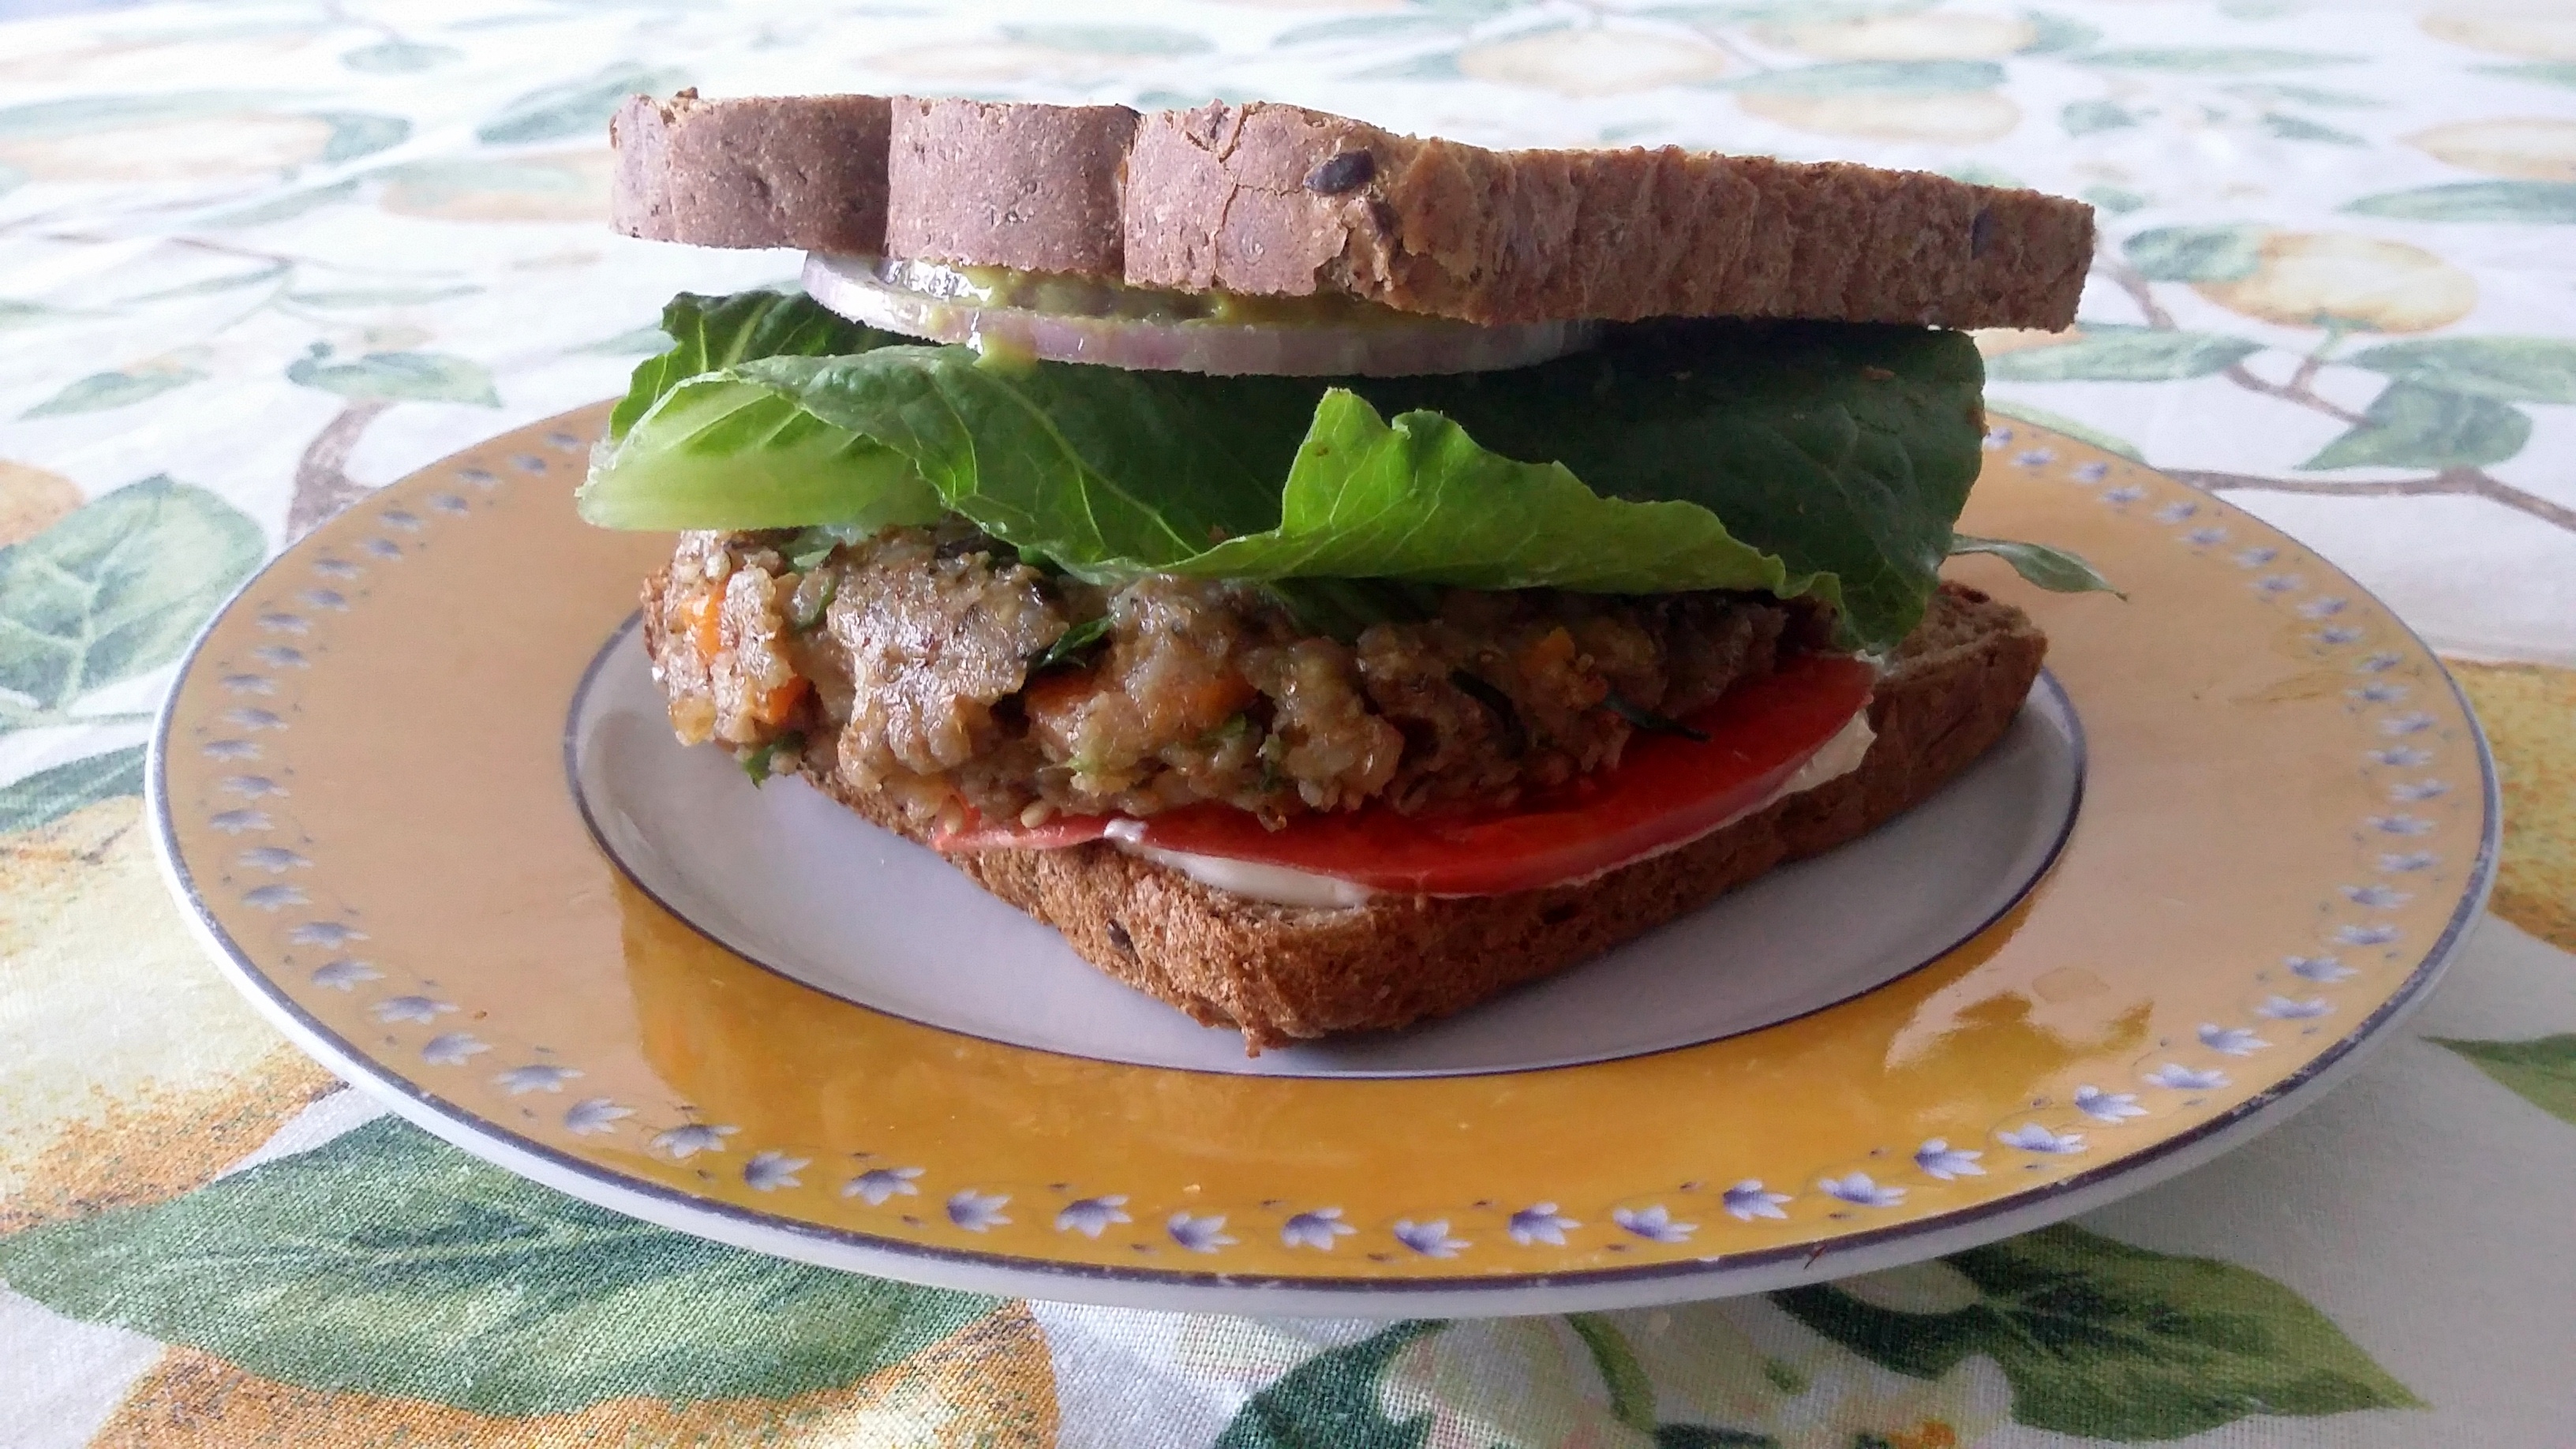 Kasha (buckwheat) vegetarian/vegan burgers | ByzantineFlowers